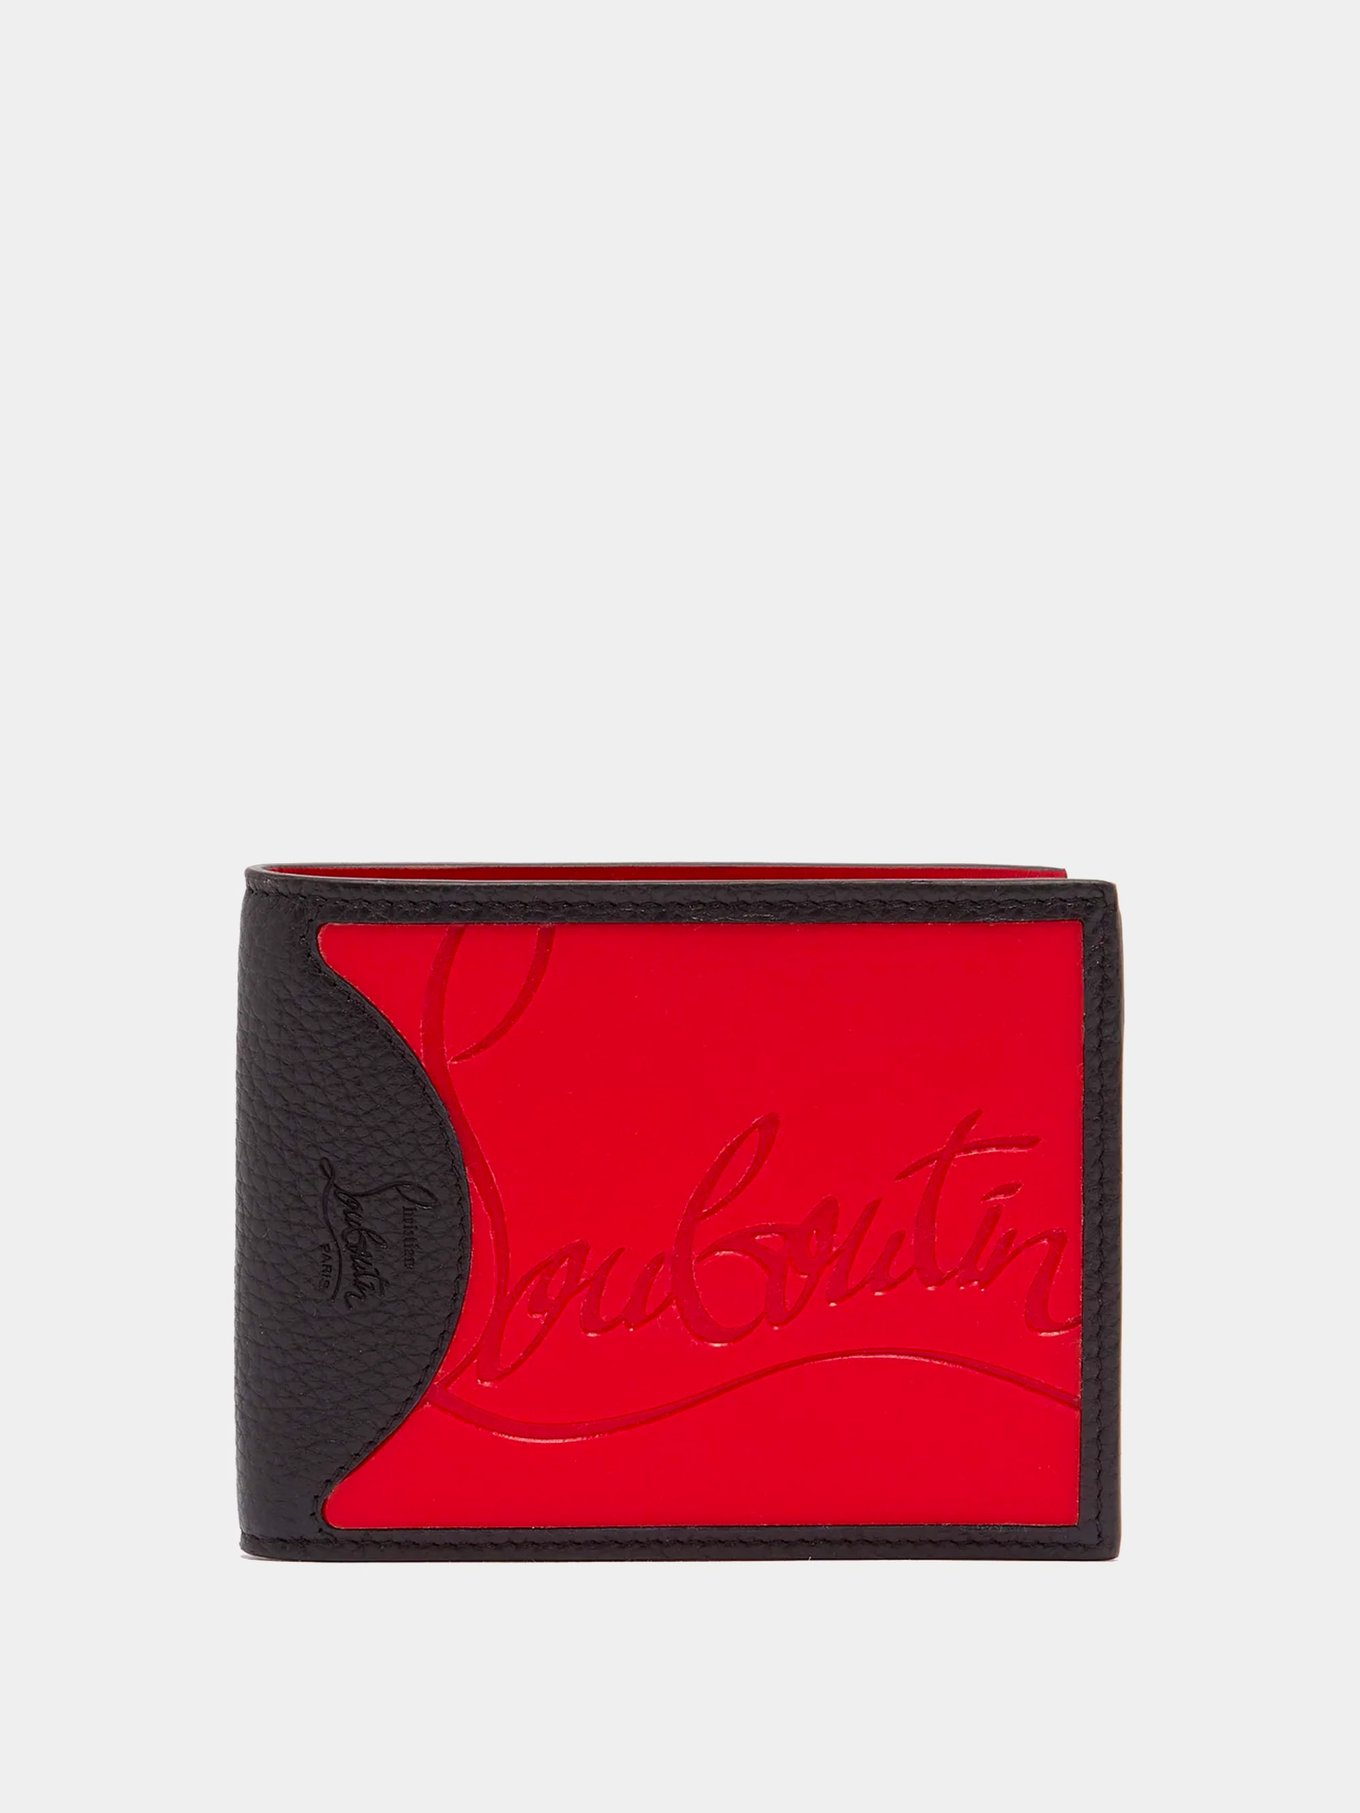 Coolcard rubber-inlay bi-fold leather wallet | Christian Louboutin